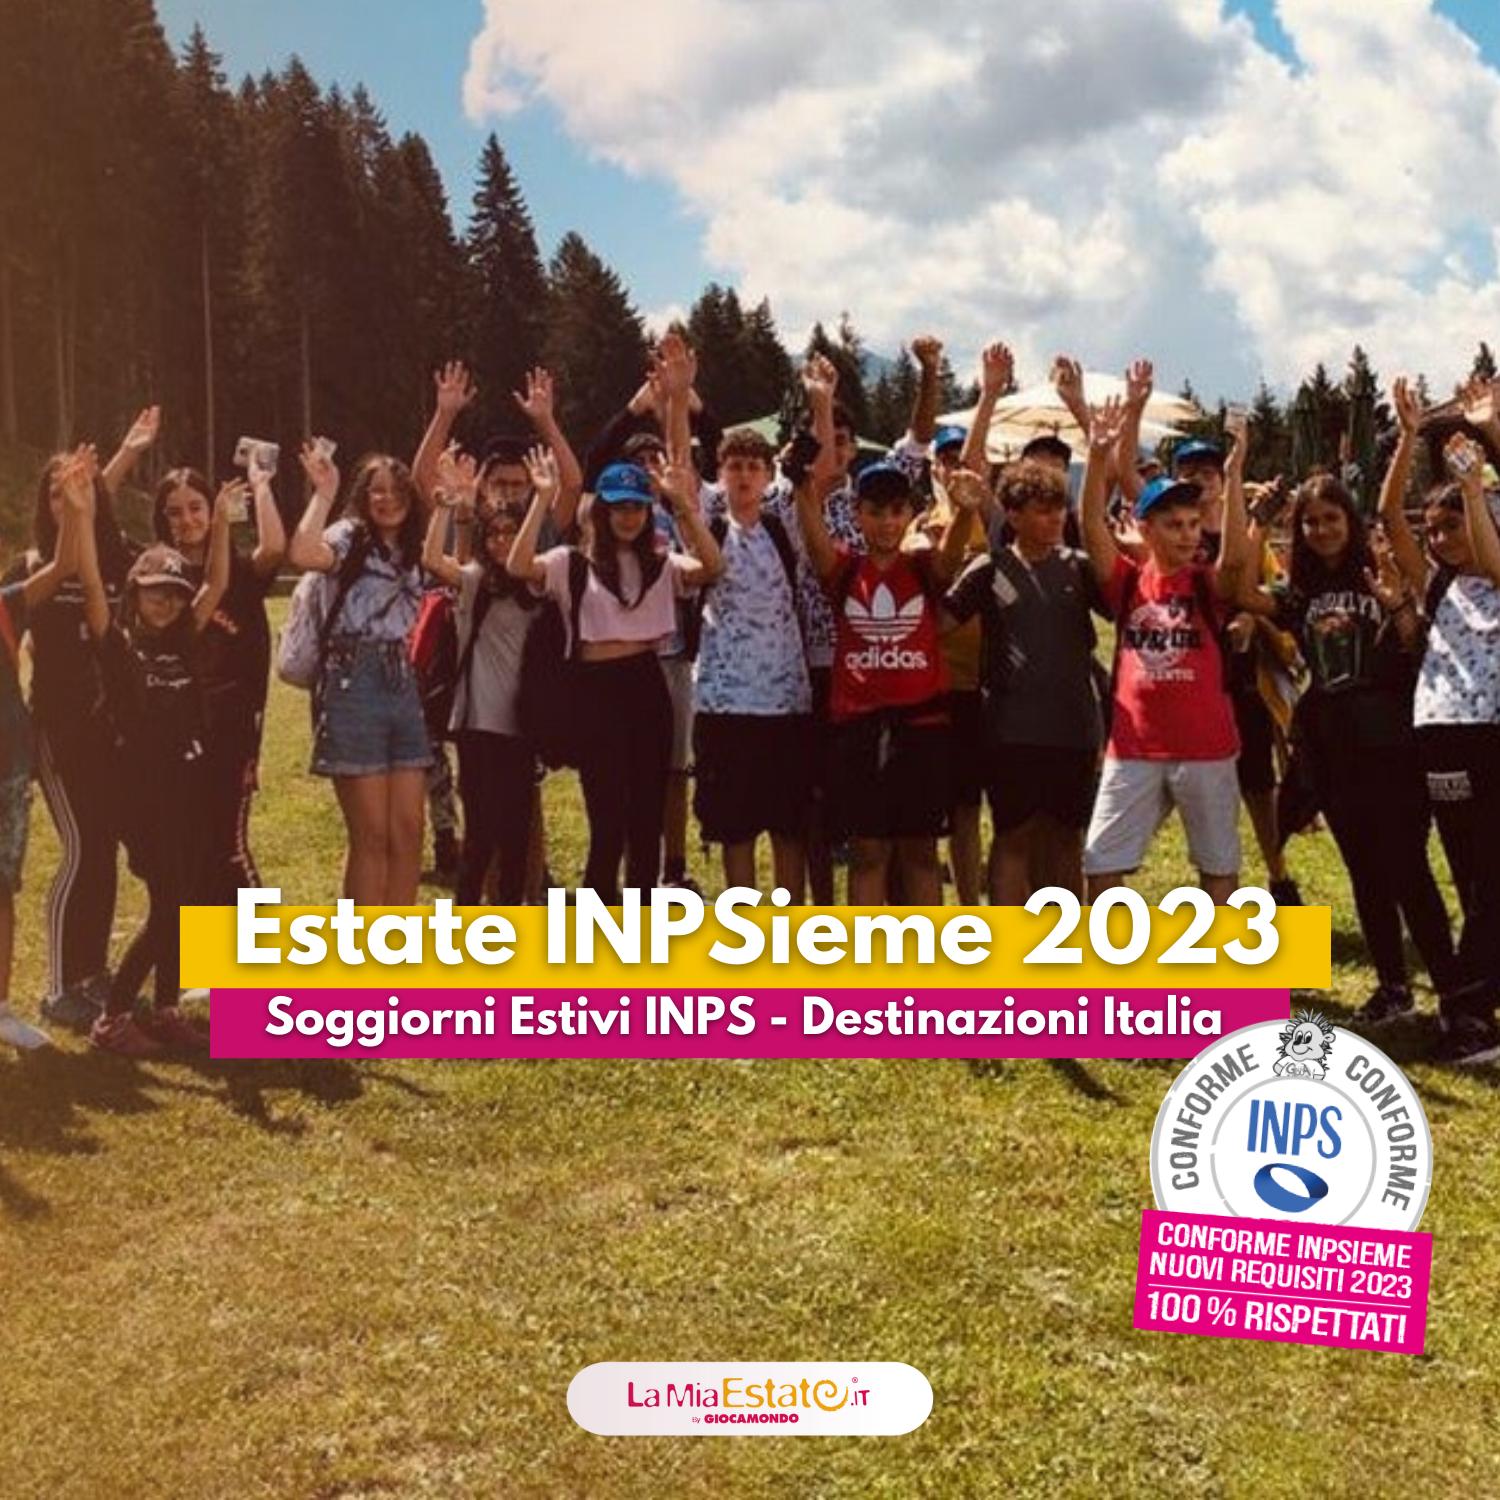 Estate INPSieme 2023 Italia | Giocamondo La Mia Estate-estate-inpsieme-2023